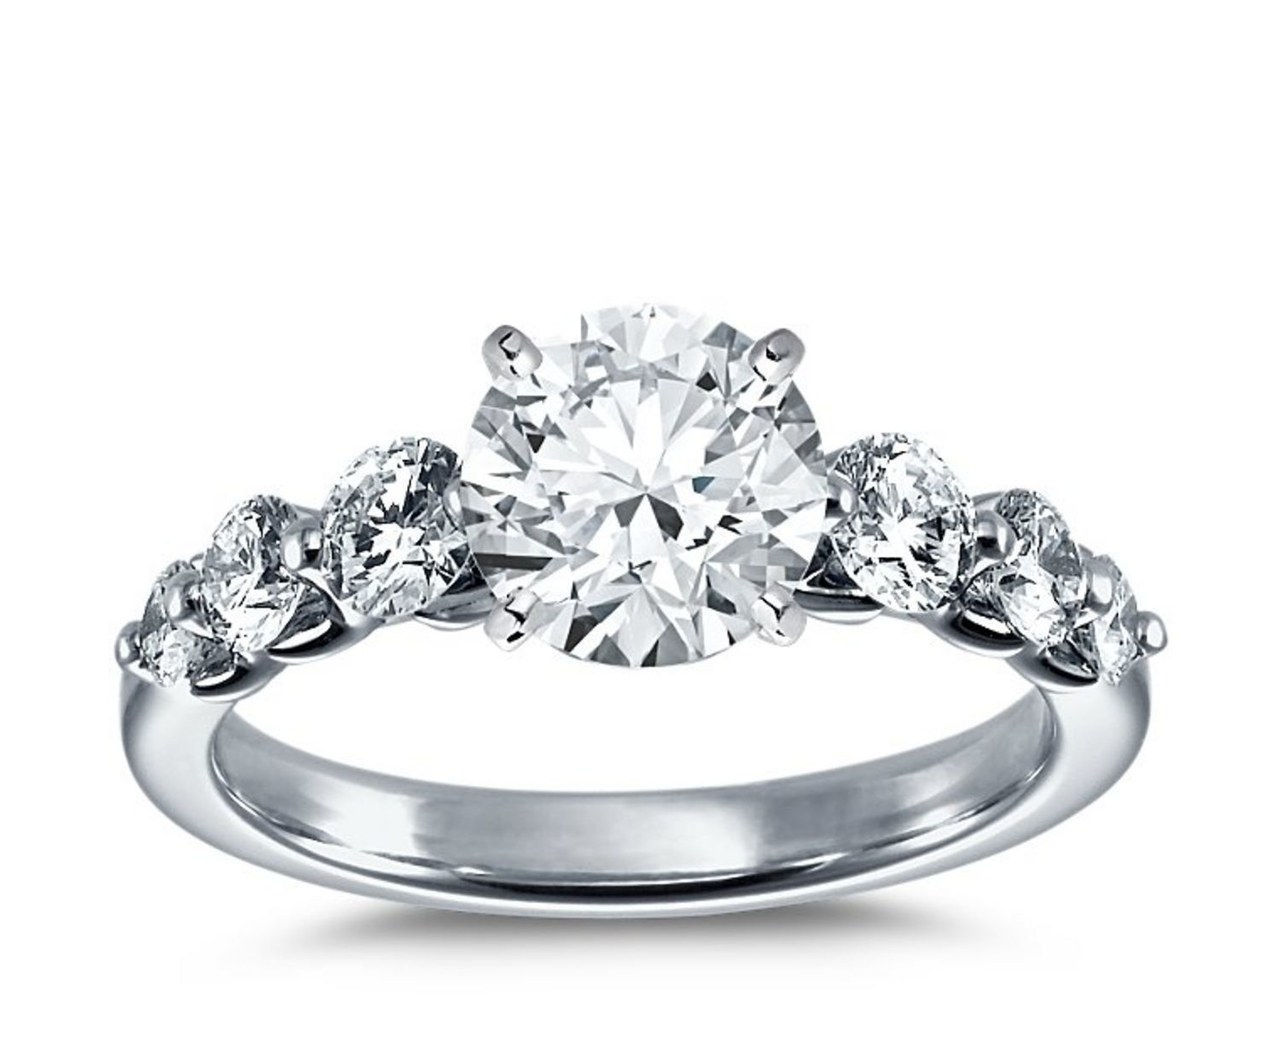 2 most popular blue nile diamond engagement rings 0808